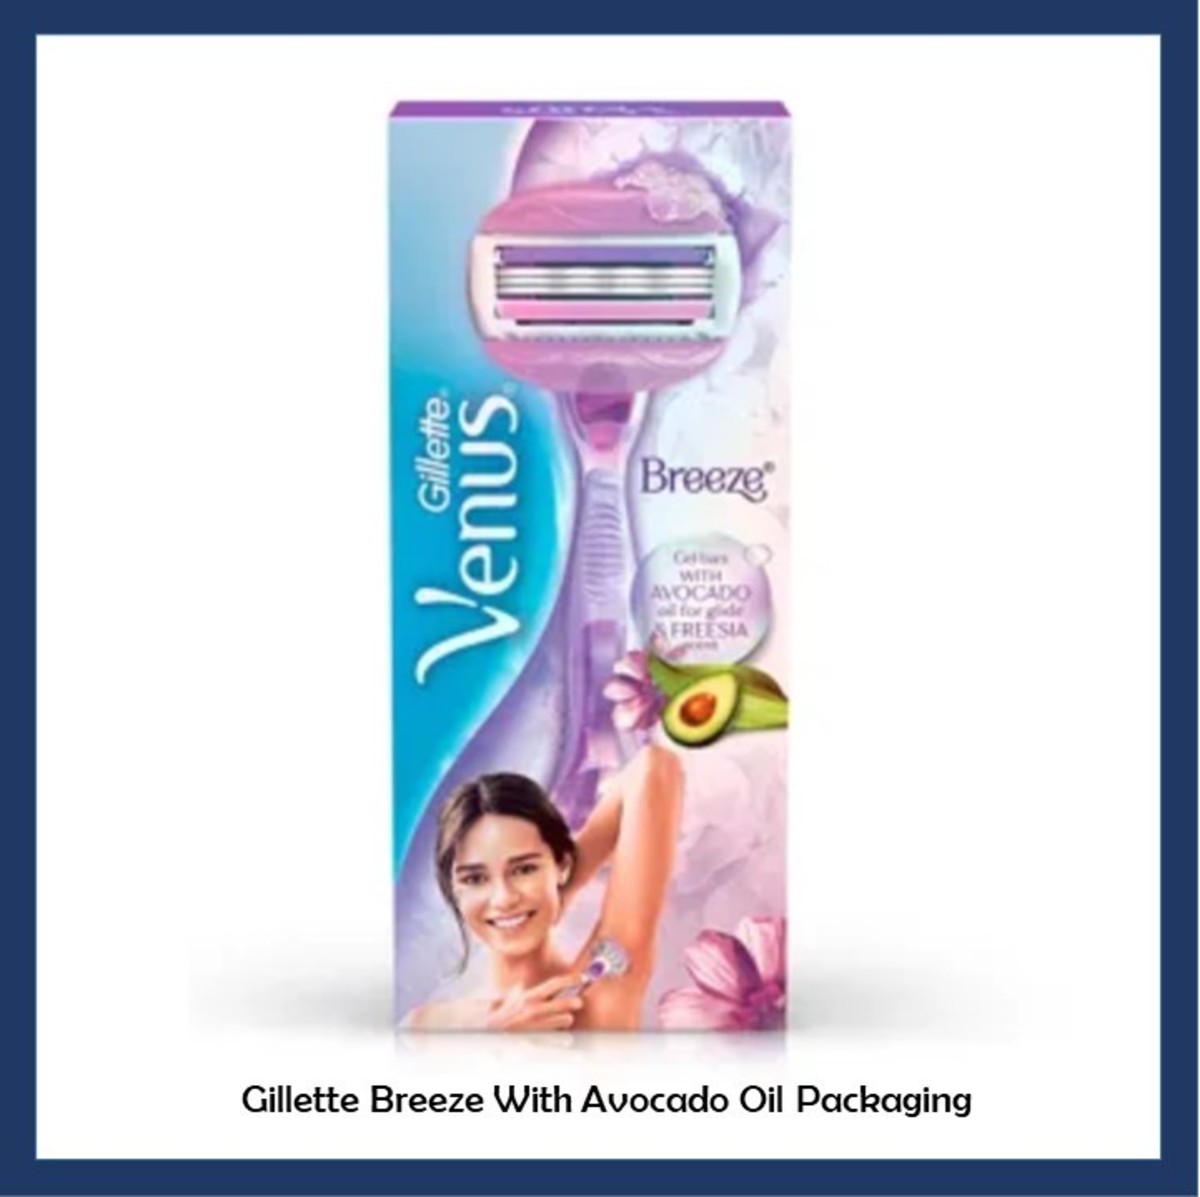 Gillette Venus Breeze packaging.